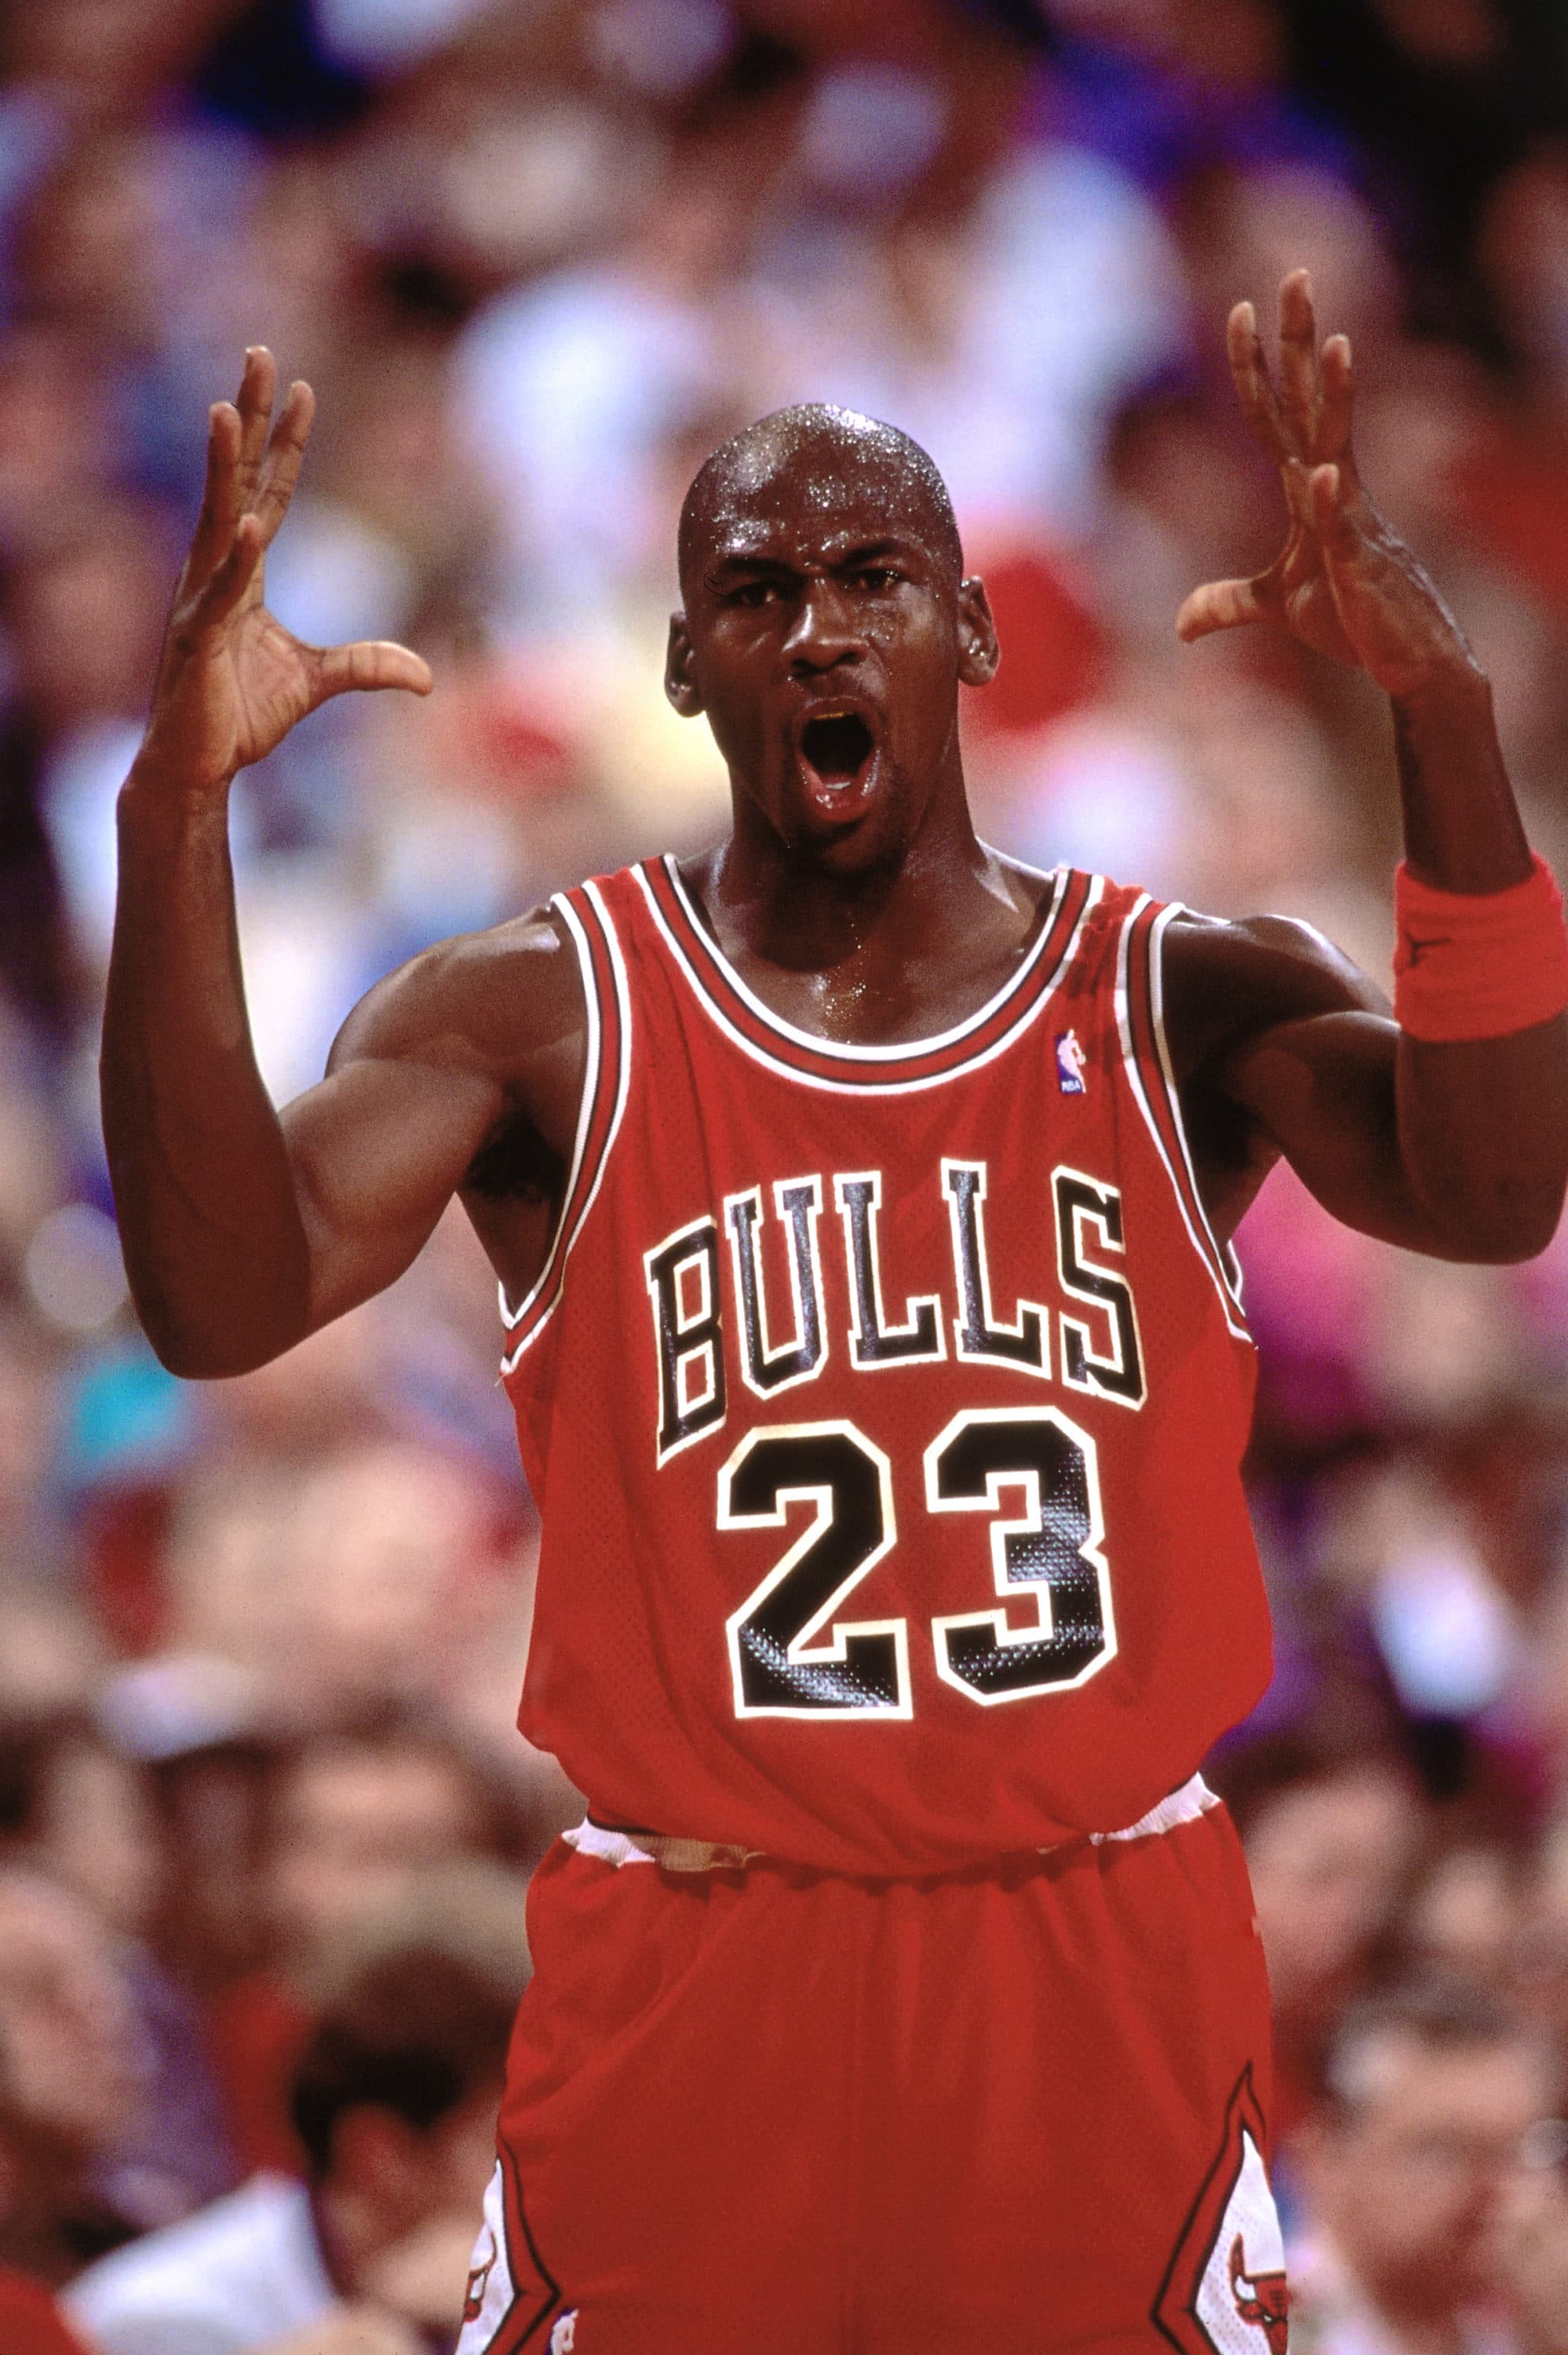 The Last Dance' Remembers The Chicago Bulls' 1997-1998 Championship Run